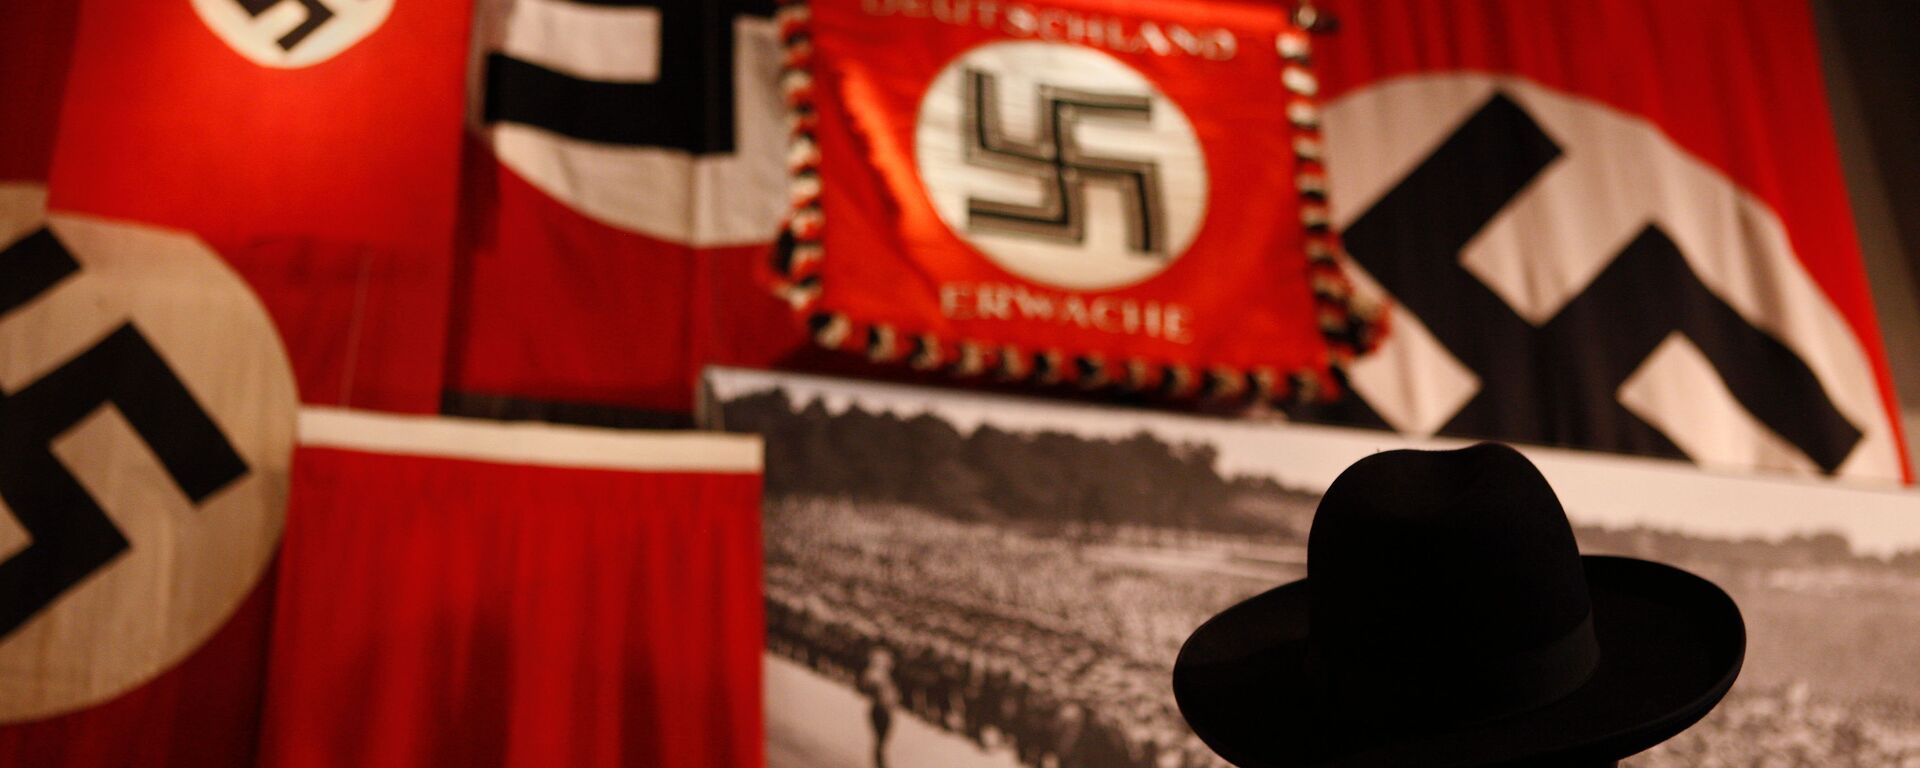 A man looks at exhibit showing the Nazi flags. - Sputnik Türkiye, 1920, 02.02.2021